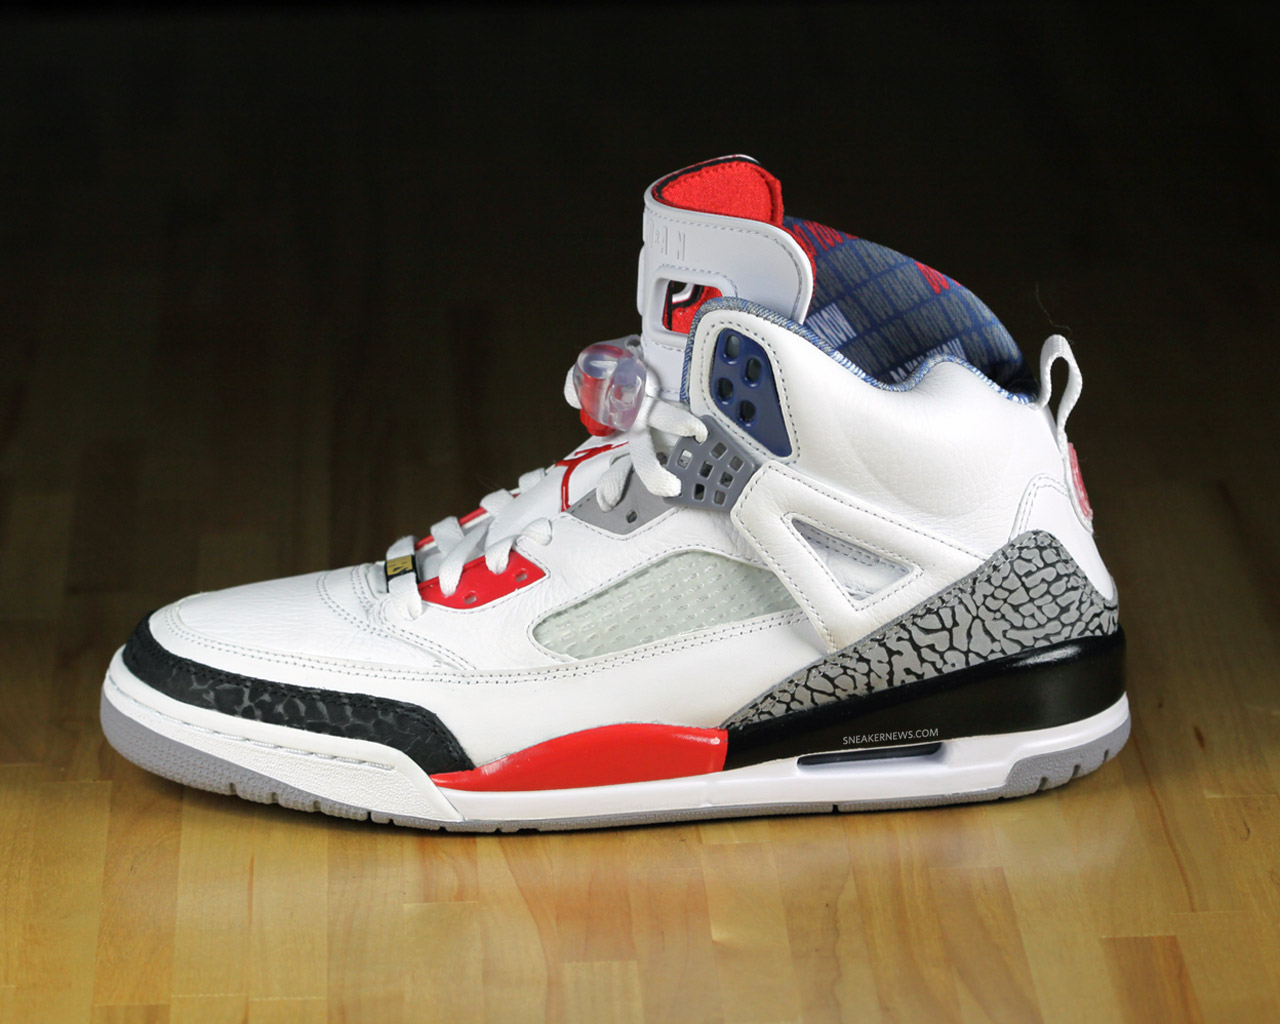 Air jordan 1 bred | Sneaker posters, Jordan shoes outlet, Nike shoes jordans